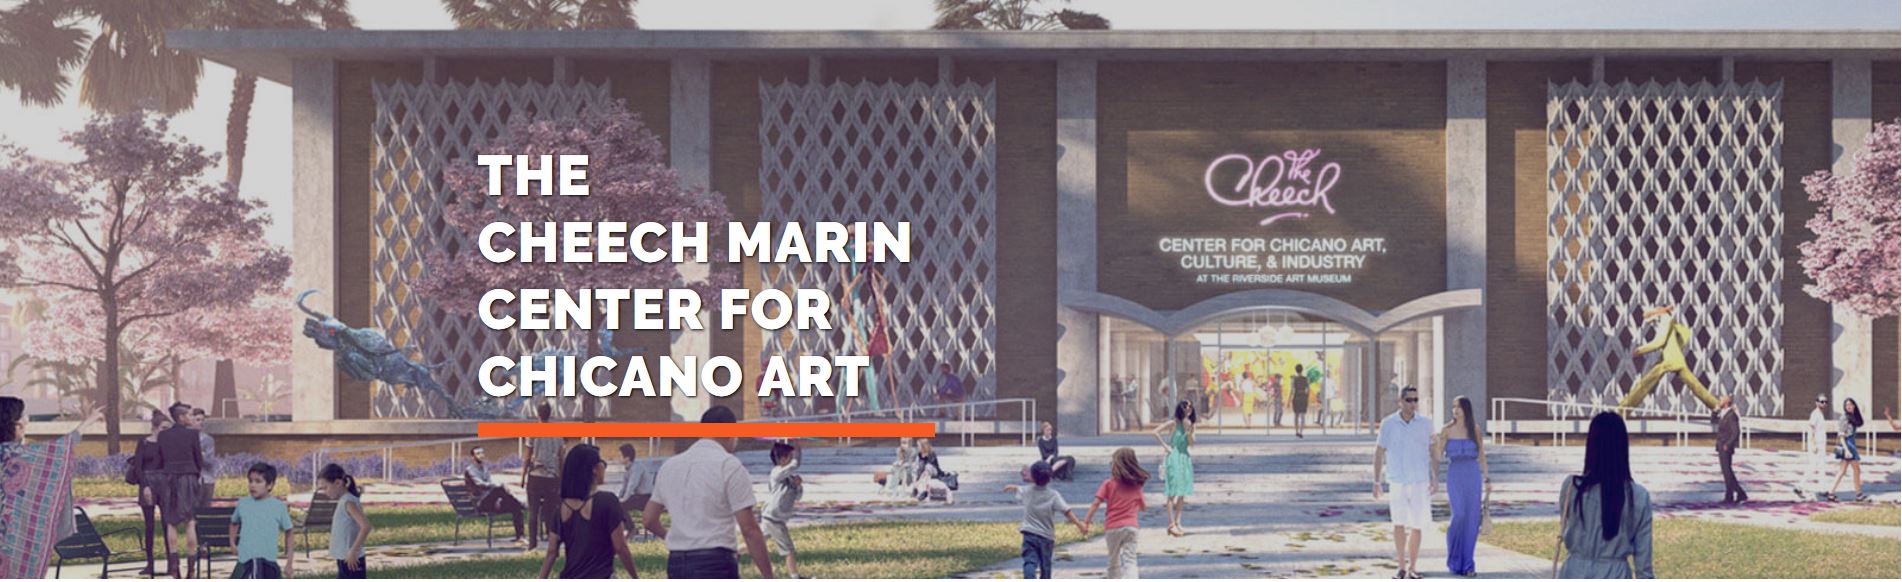 THE CHEECH MARIN CENTER FOR CHICANO ART